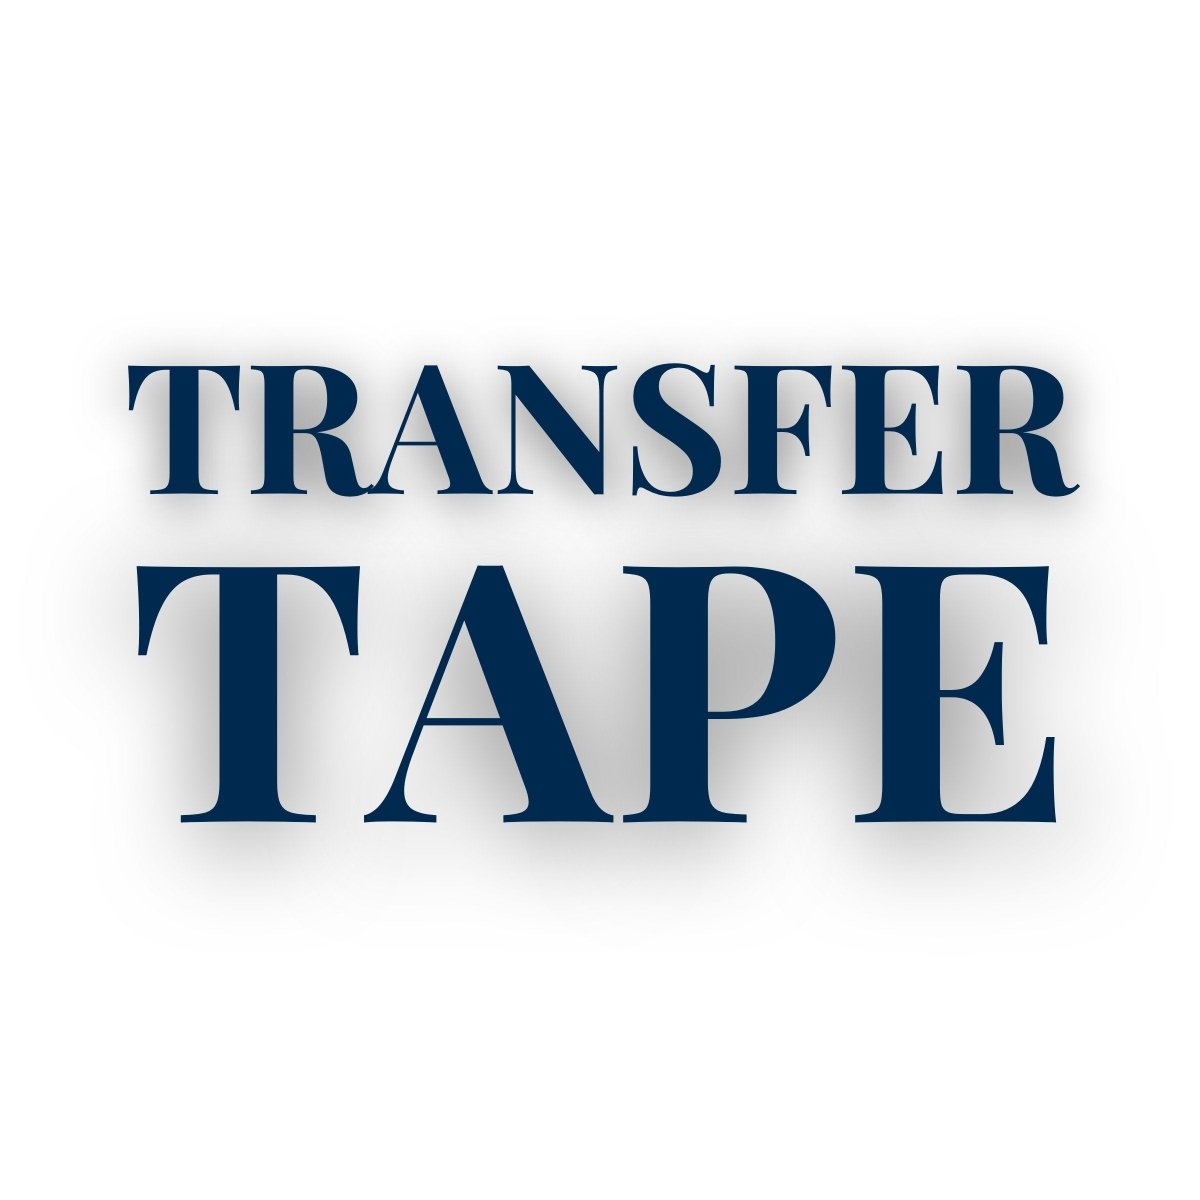 Transfer Tape